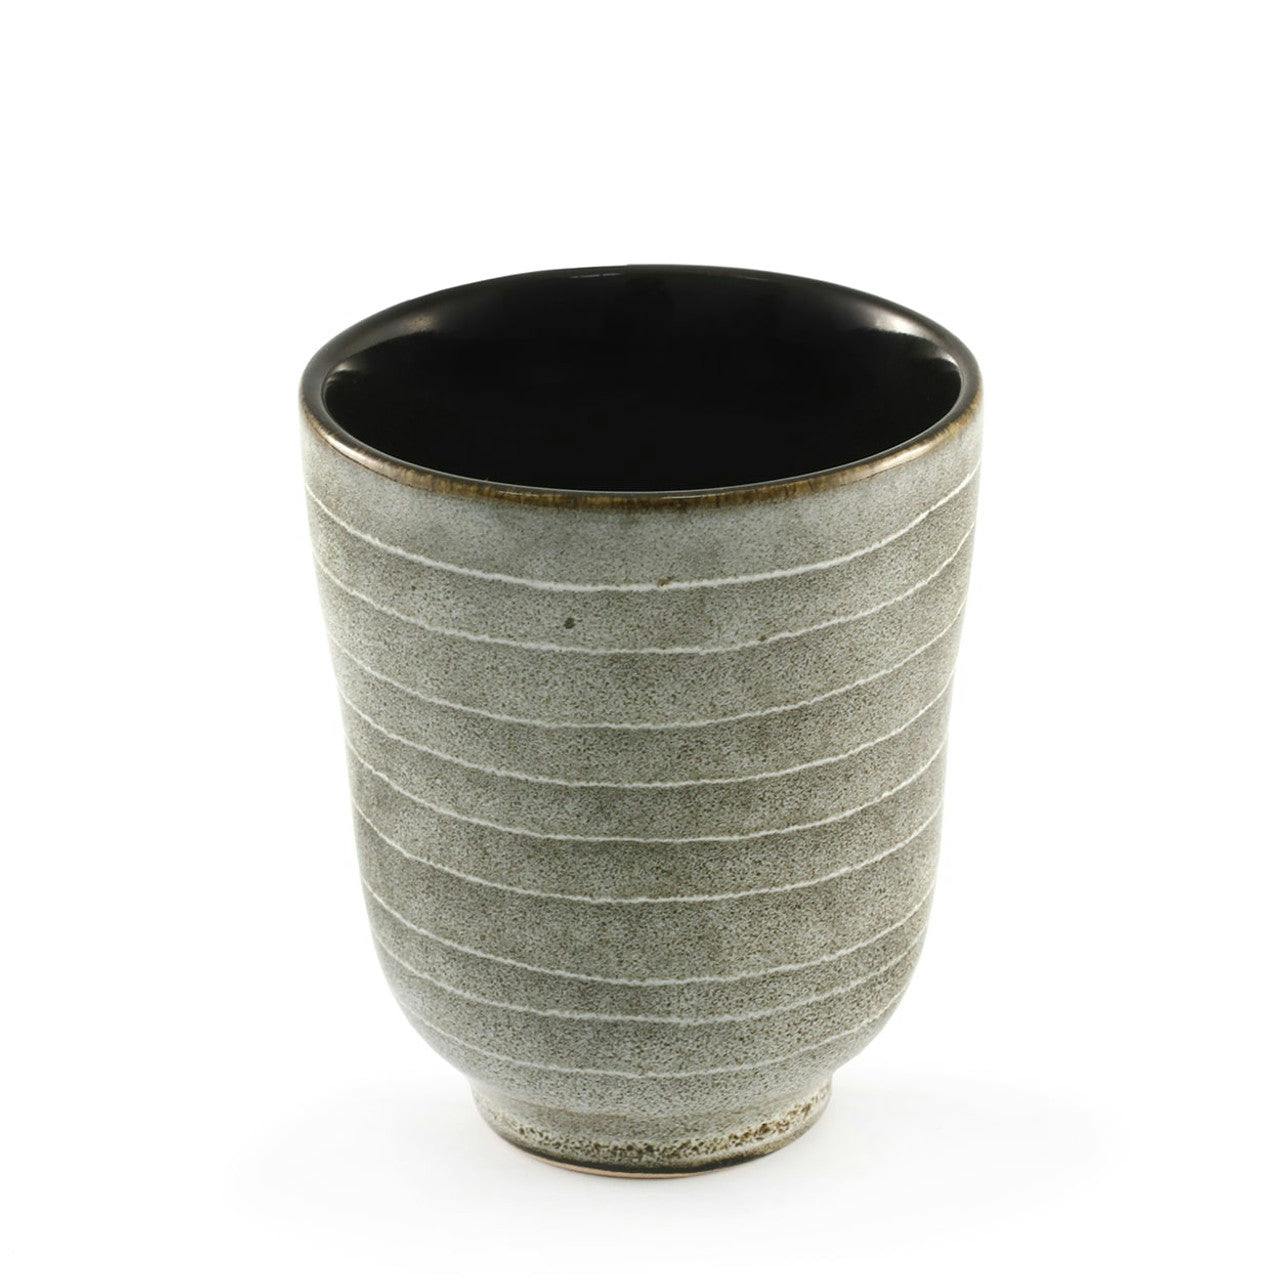 Striped Yunomi Teacup with Black Interior 灰底 光面 白纹 茶杯 8 fl oz / 3.03" dia